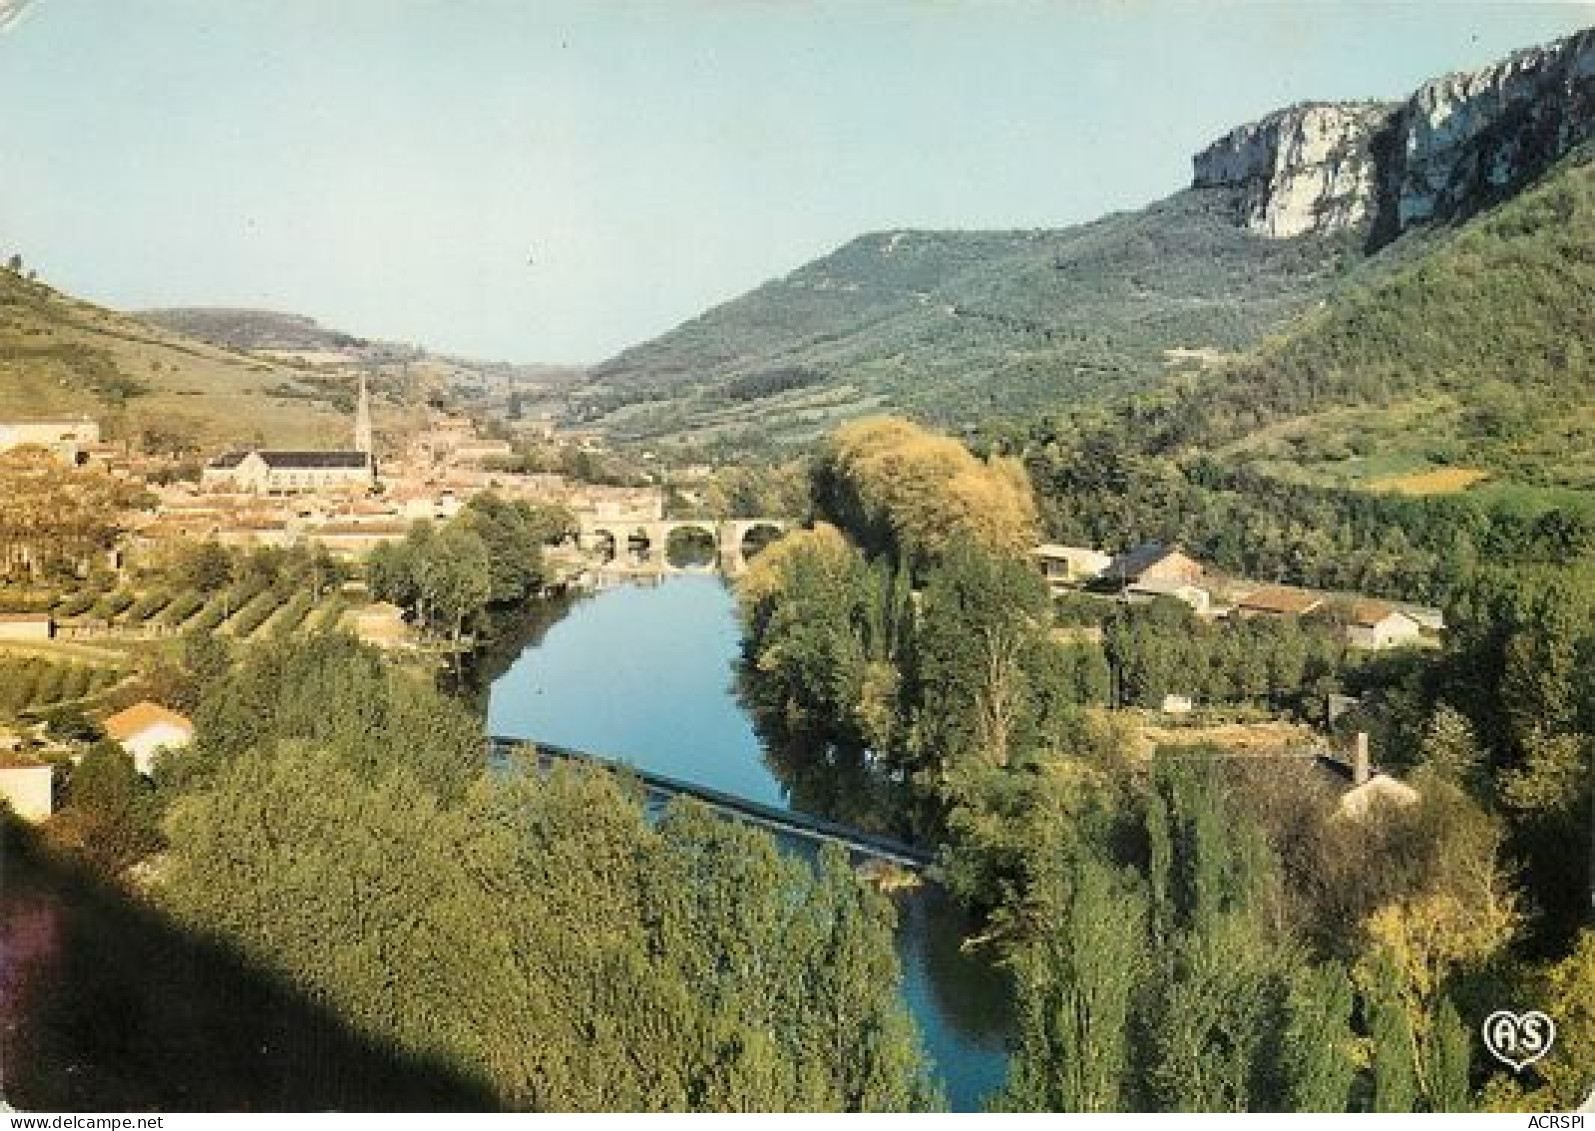 SAINT ANTONIN NOBLE VAL   Vue Generale Panoramique   2  (scan Recto-verso)MA2270Ter - Saint Antonin Noble Val